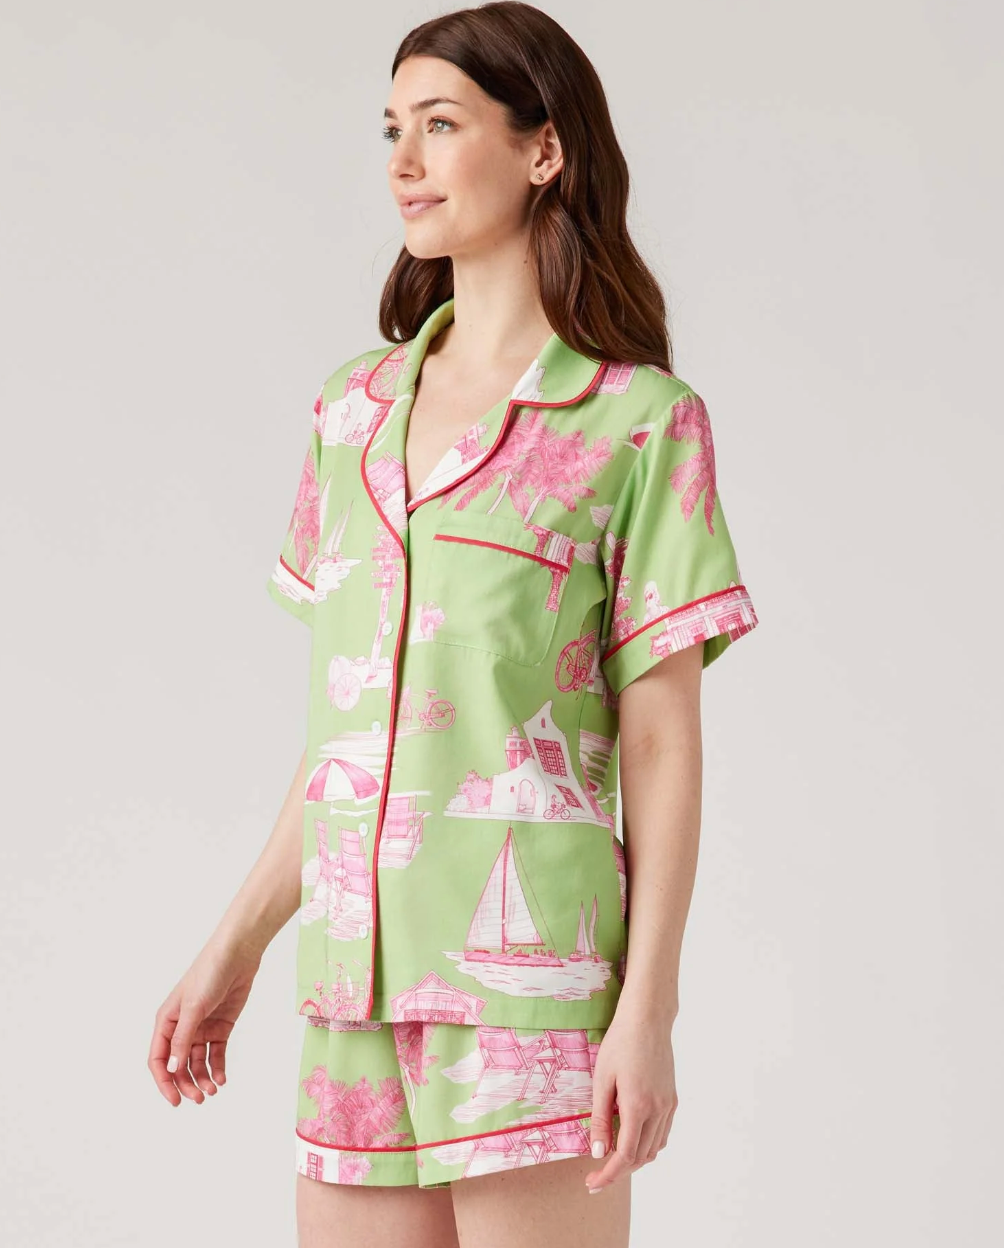 Florida Toile Pajama Short Set - Pink/Green - Katie Kime